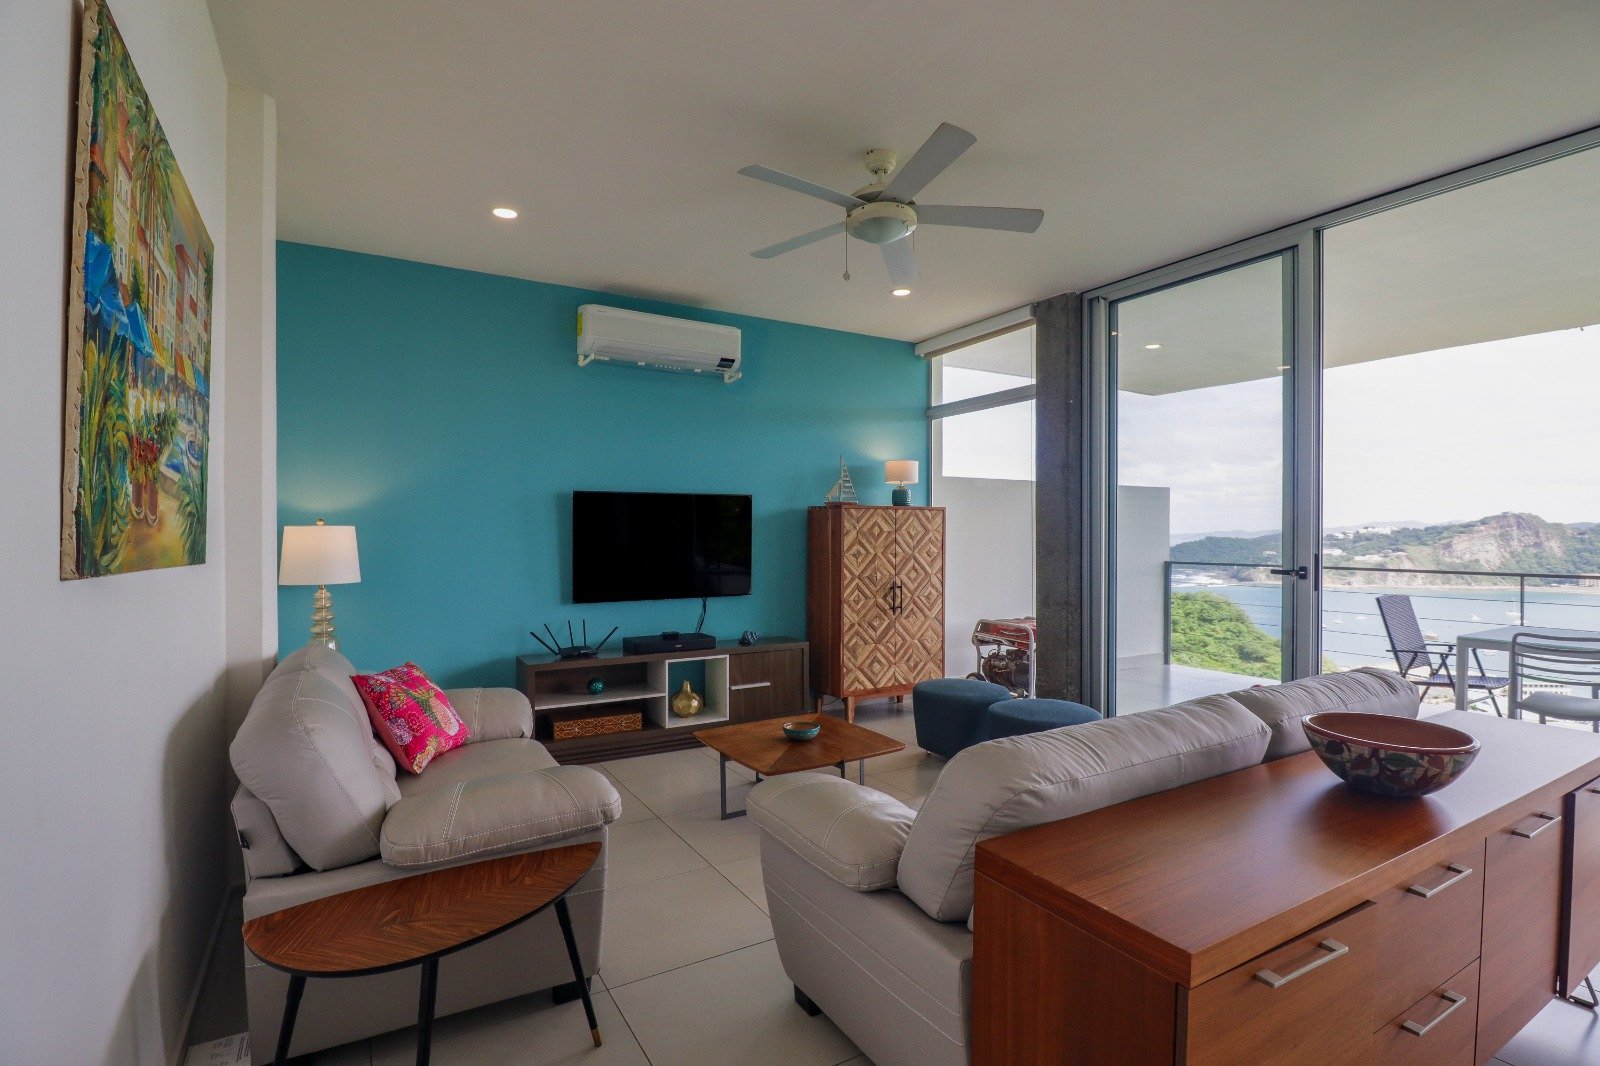 Two bedroom ocean view home for sale property real estate San Juan Del Sur (13).jpeg